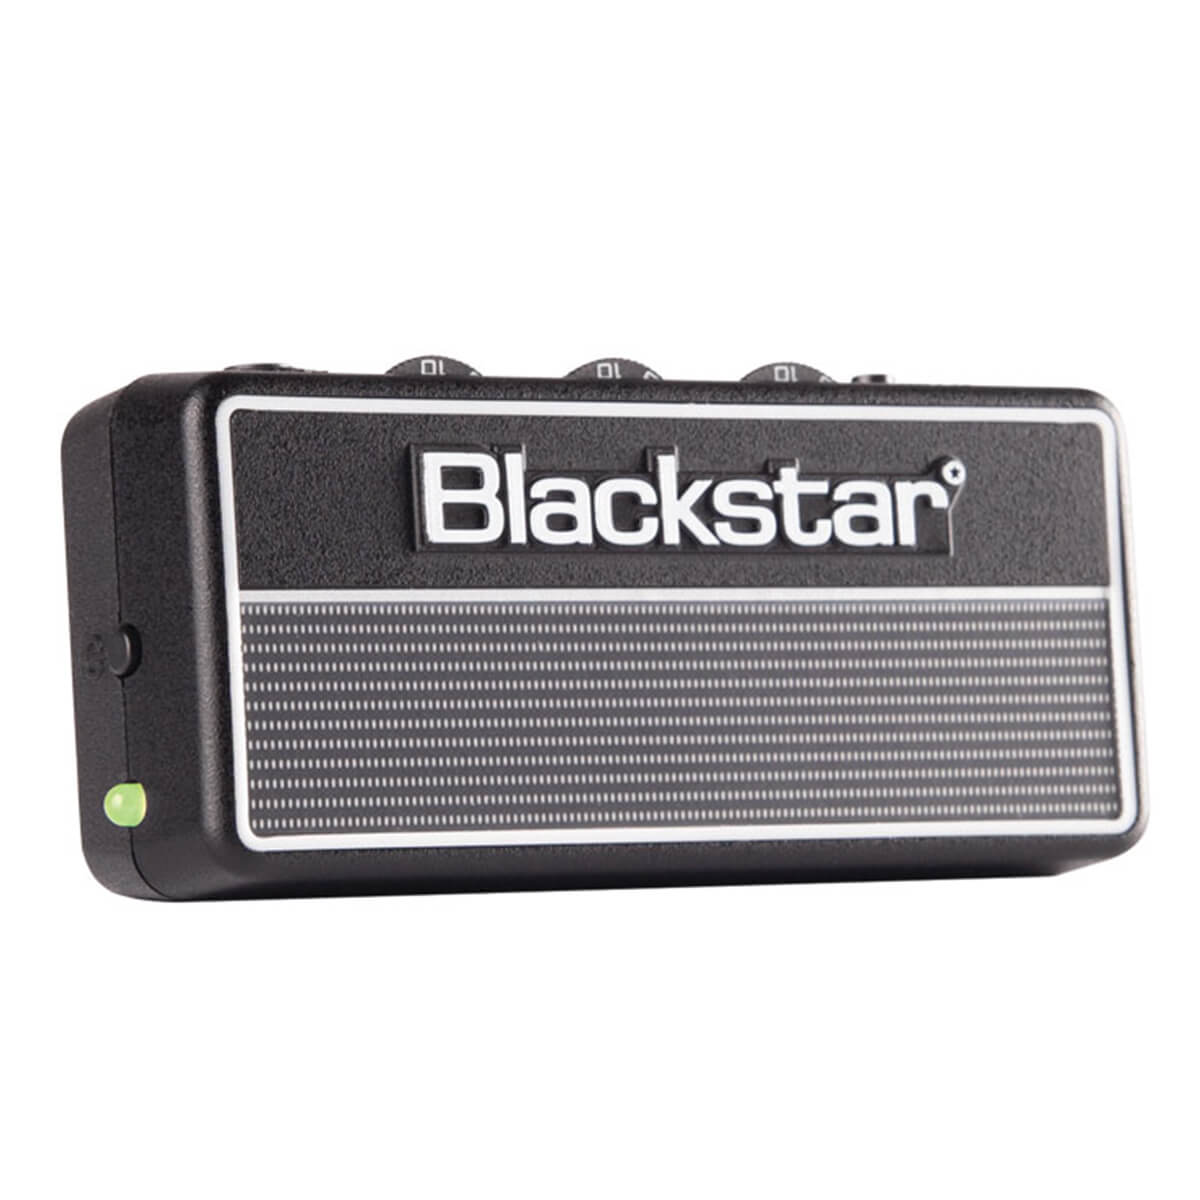 Blackstar amPlug 2 FLY guitar amplifier front